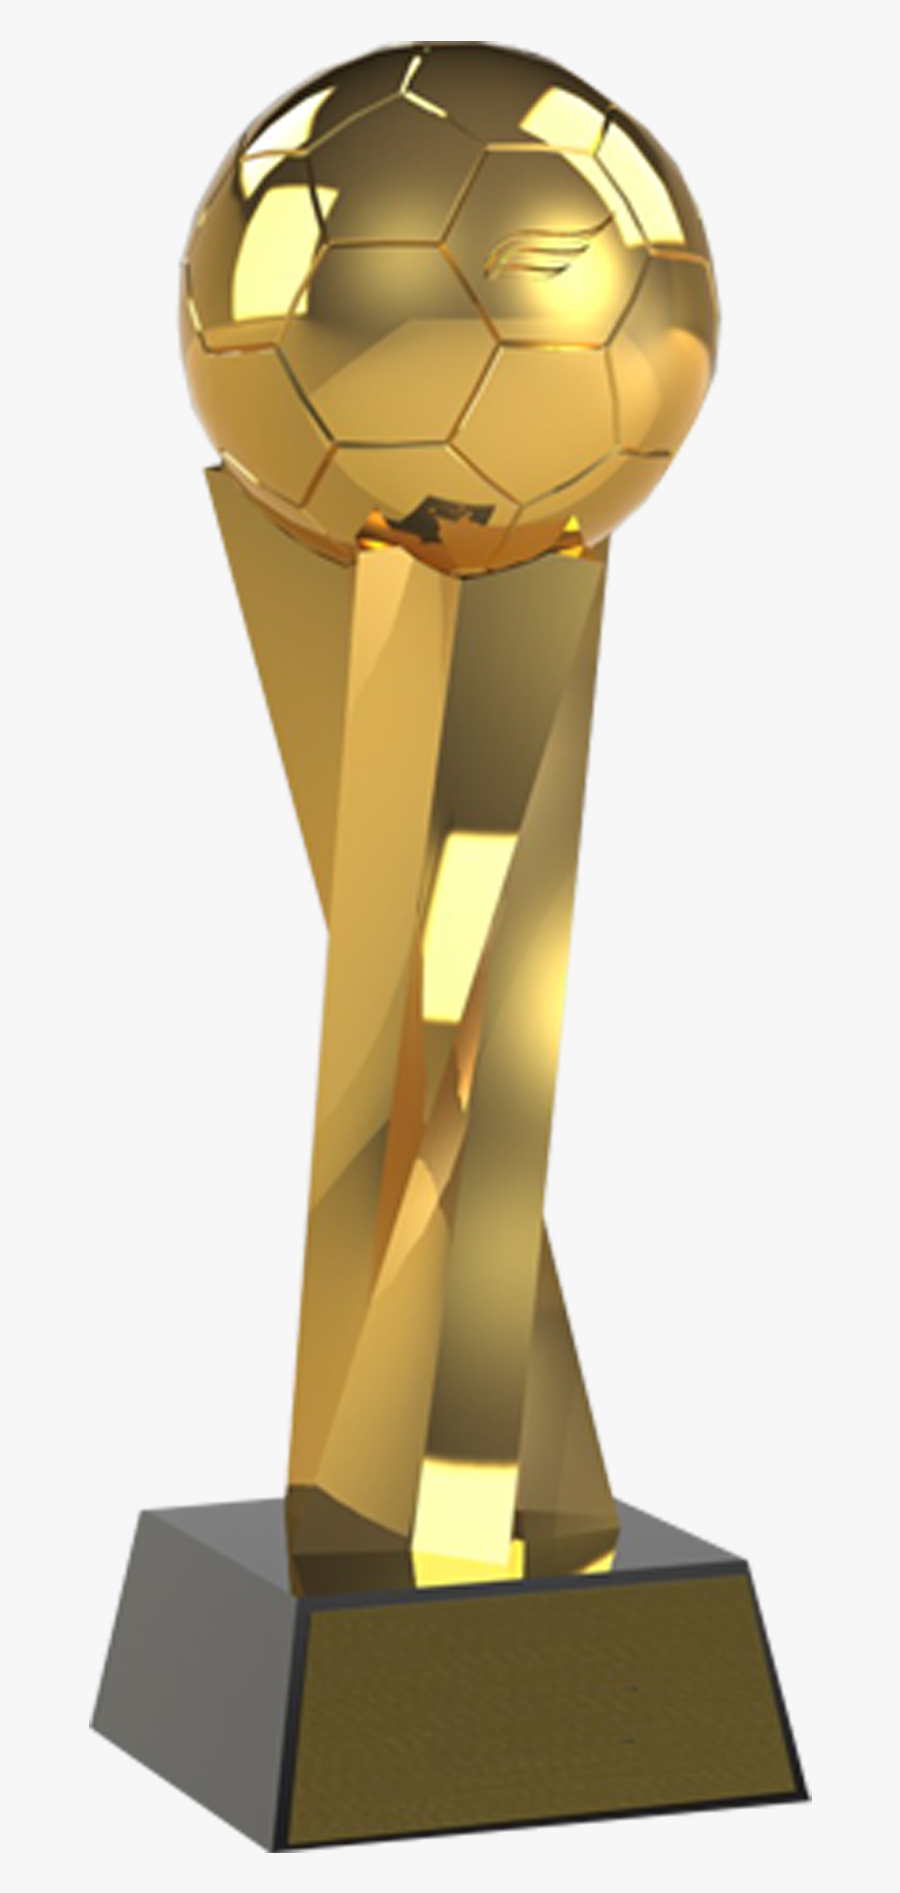 Trophy Golden Cup Award Altrum Printing Reconnaissance - 3d Printed Football Trophy, Transparent Clipart